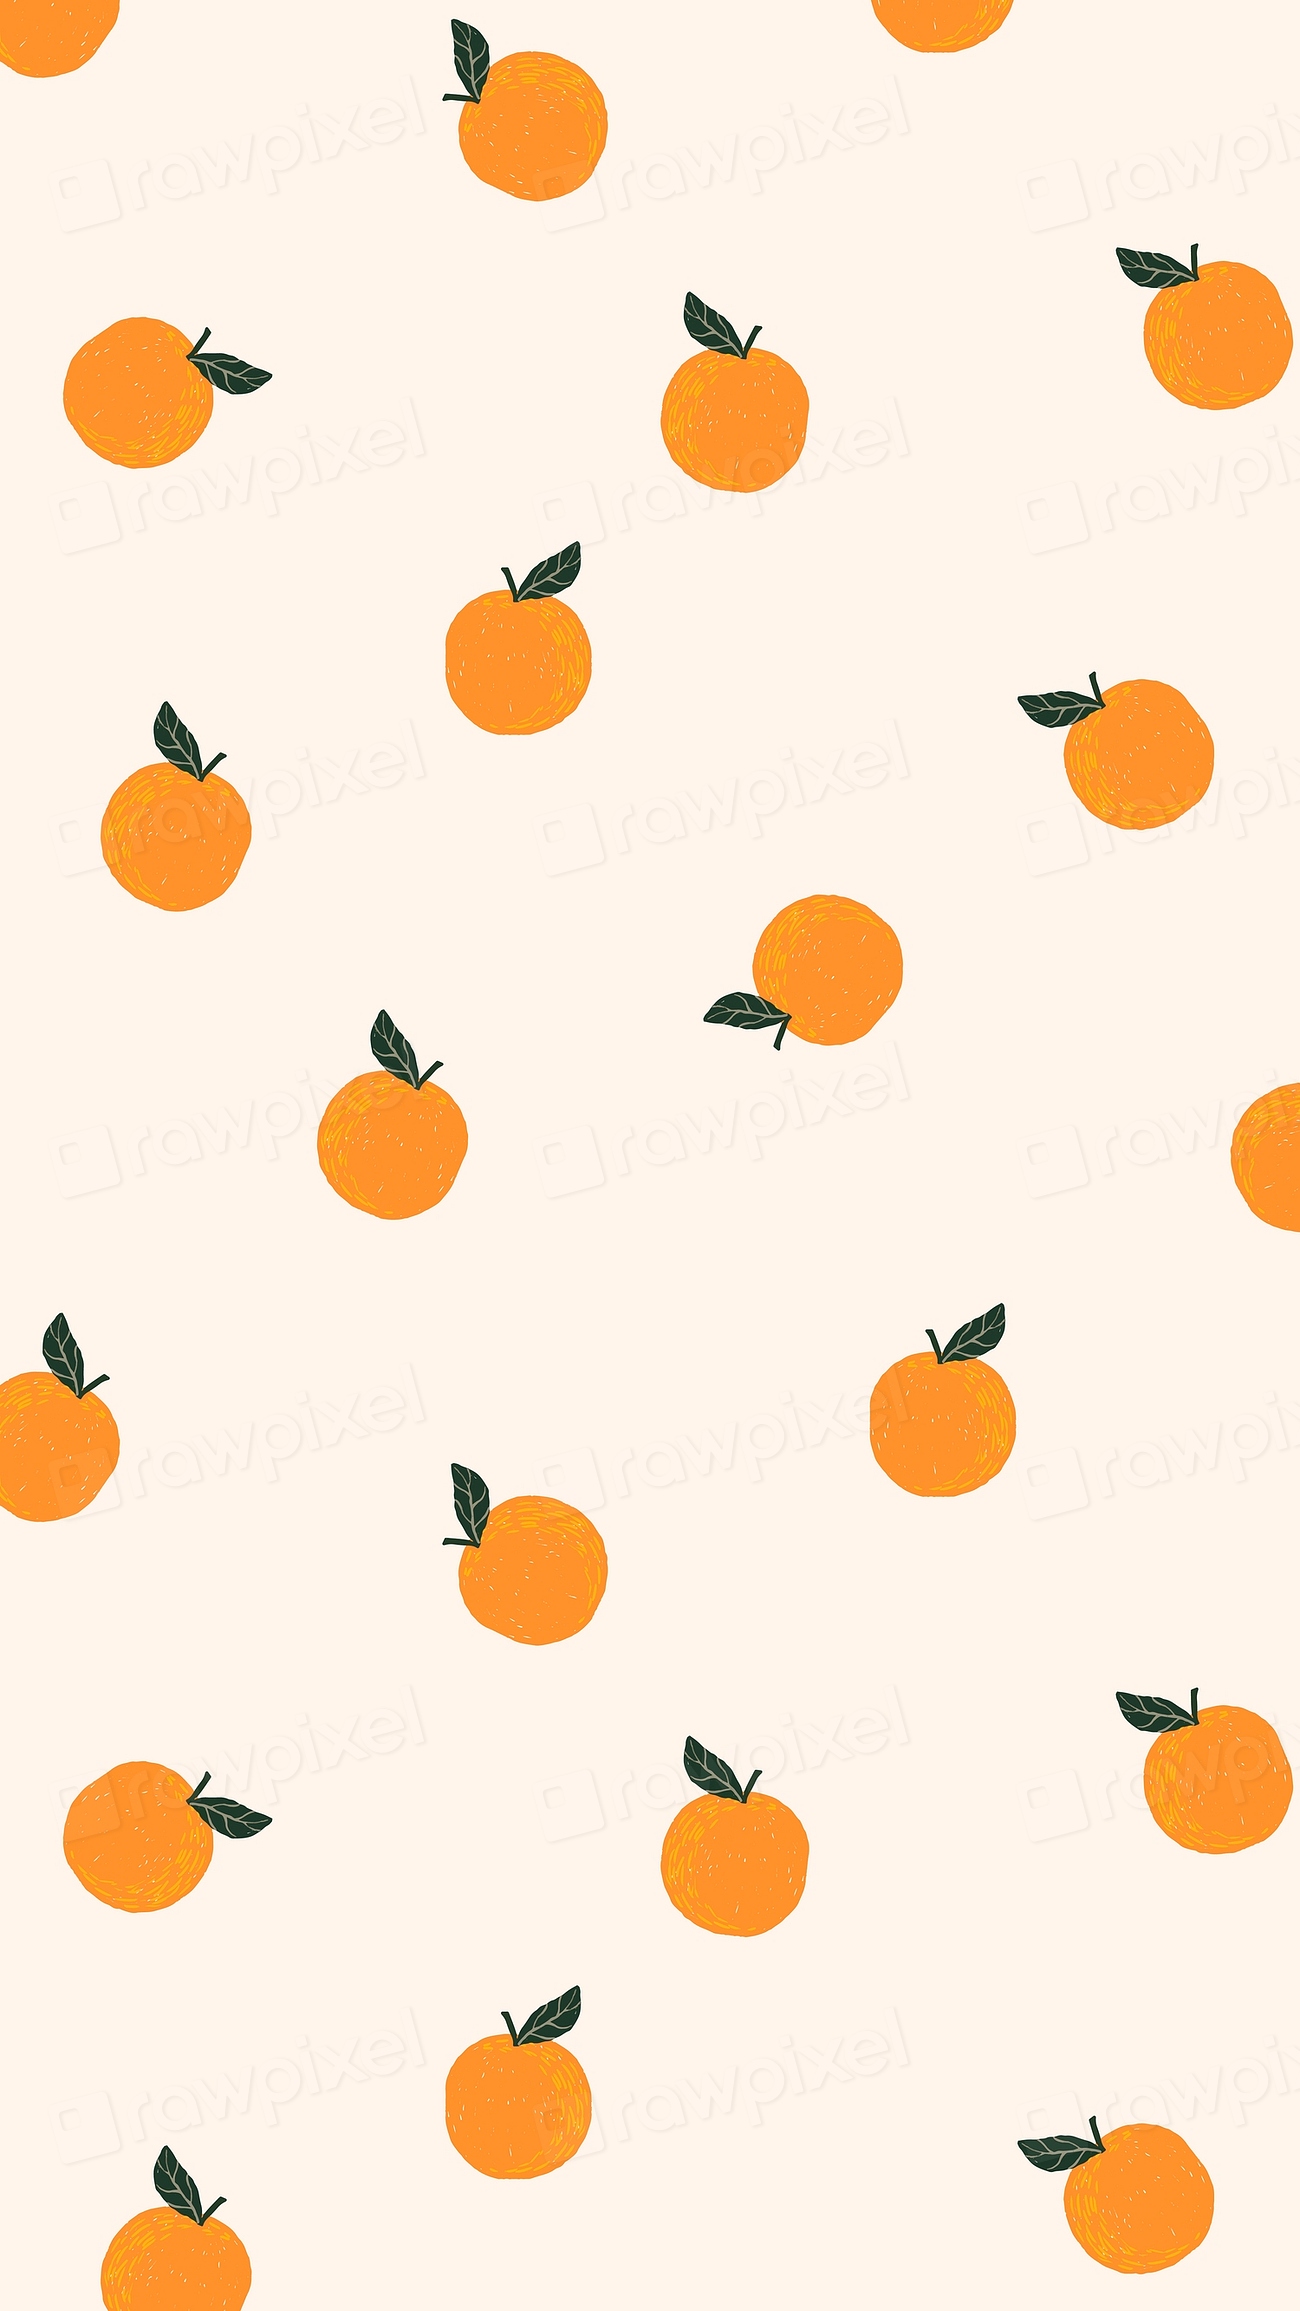 Orange iPhone wallpaper, mobile background, | Free Vector - rawpixel